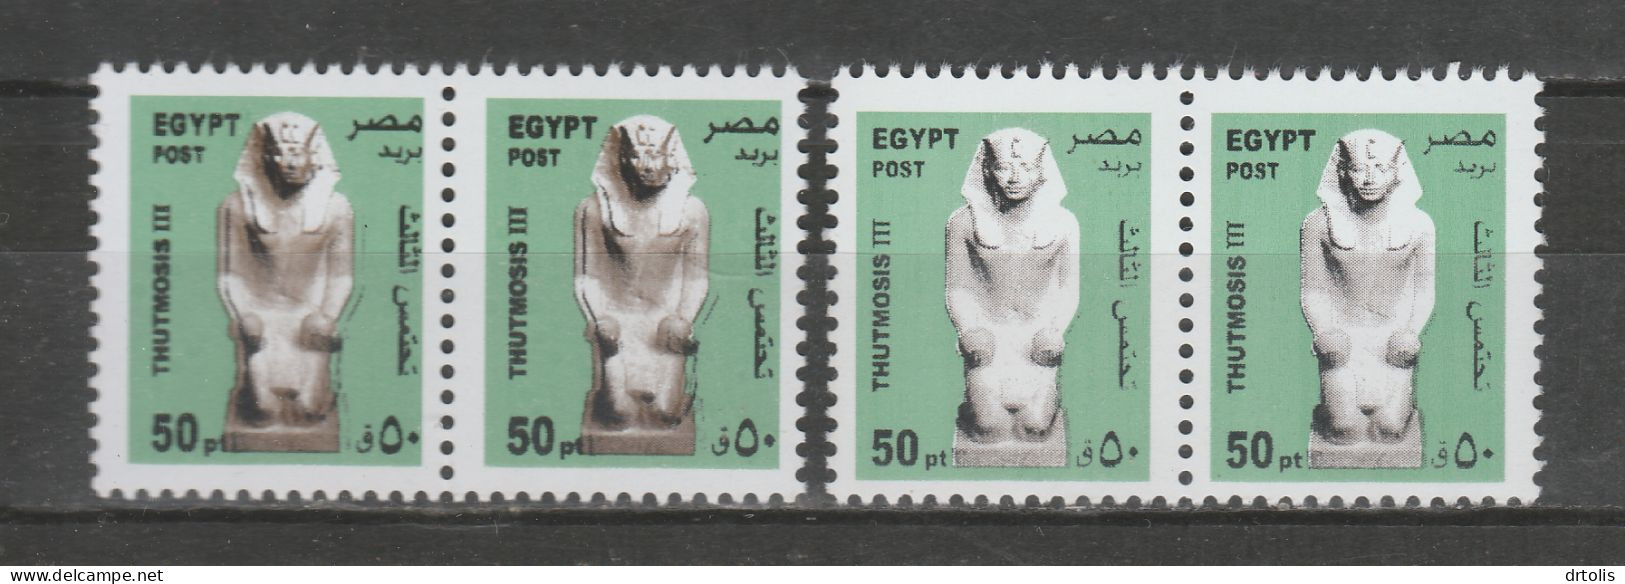 EGYPT / 2013 / THUTMOSE III  / PRINTING ERROR / ARCHEOLOGY / EGYPTOLOGY / MNH / VF . - Ungebraucht